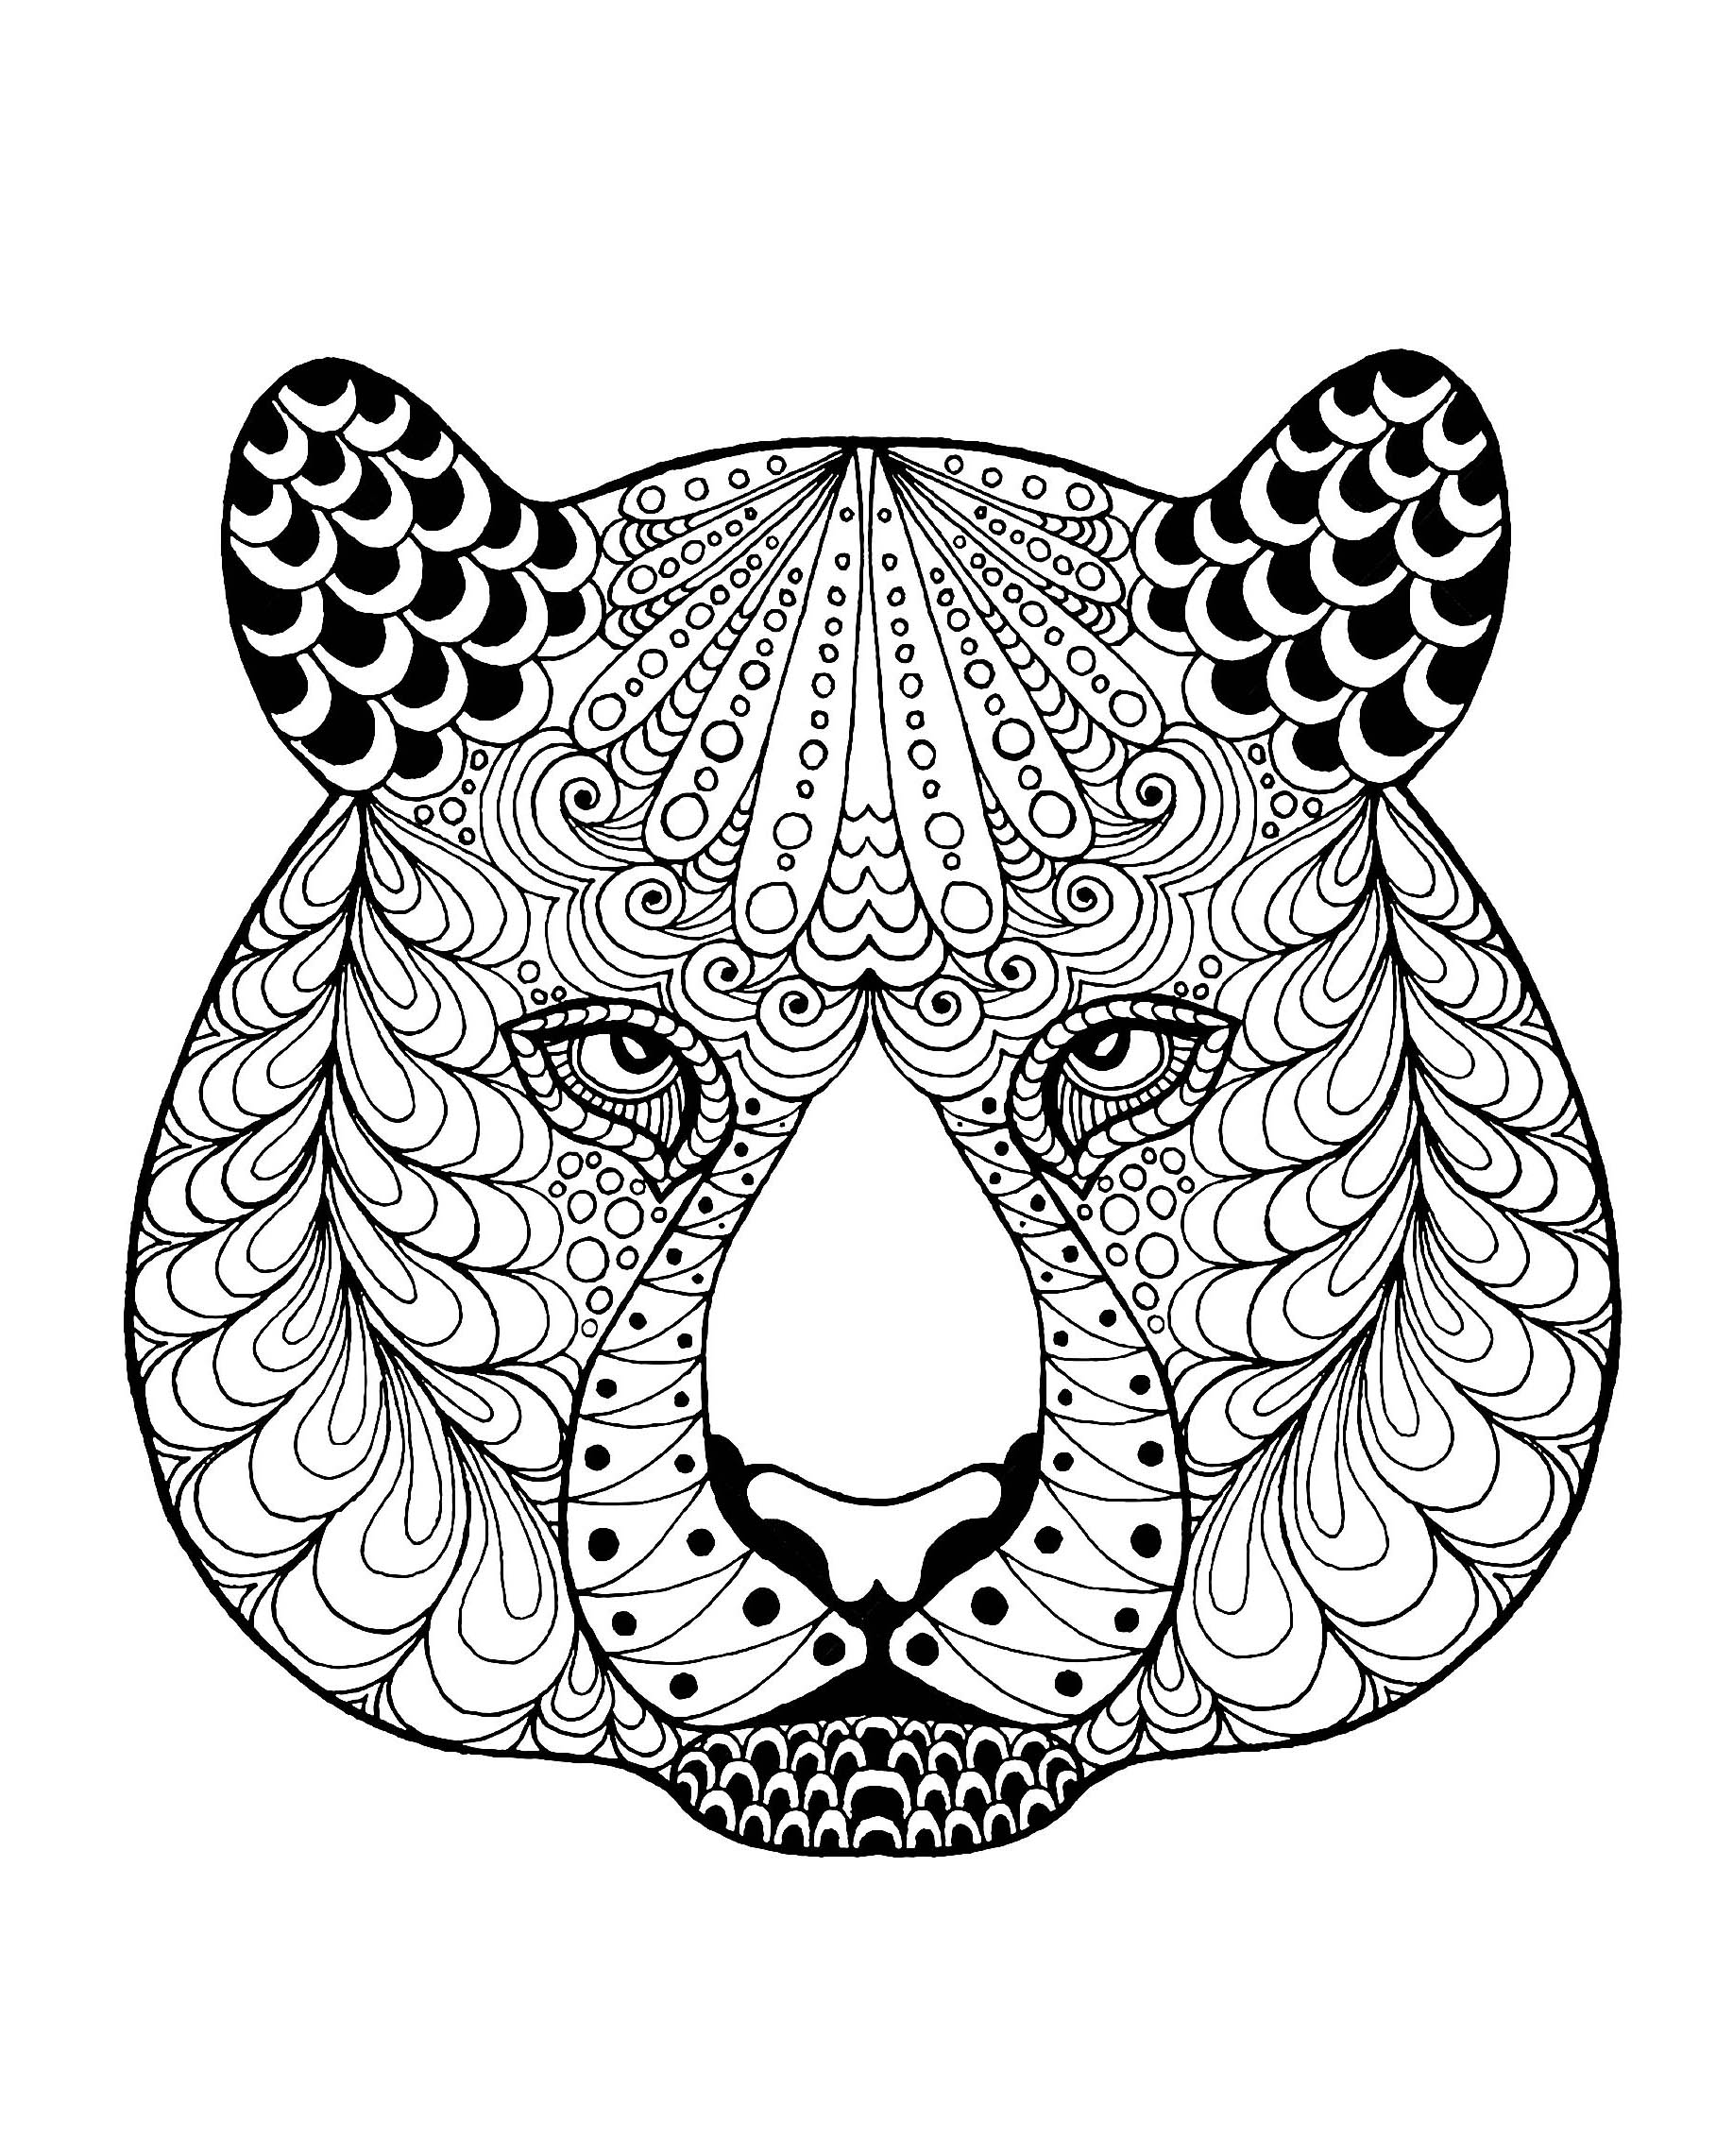 Tête de tigre à colorier, Artiste : Safiullina   Source : 123rf